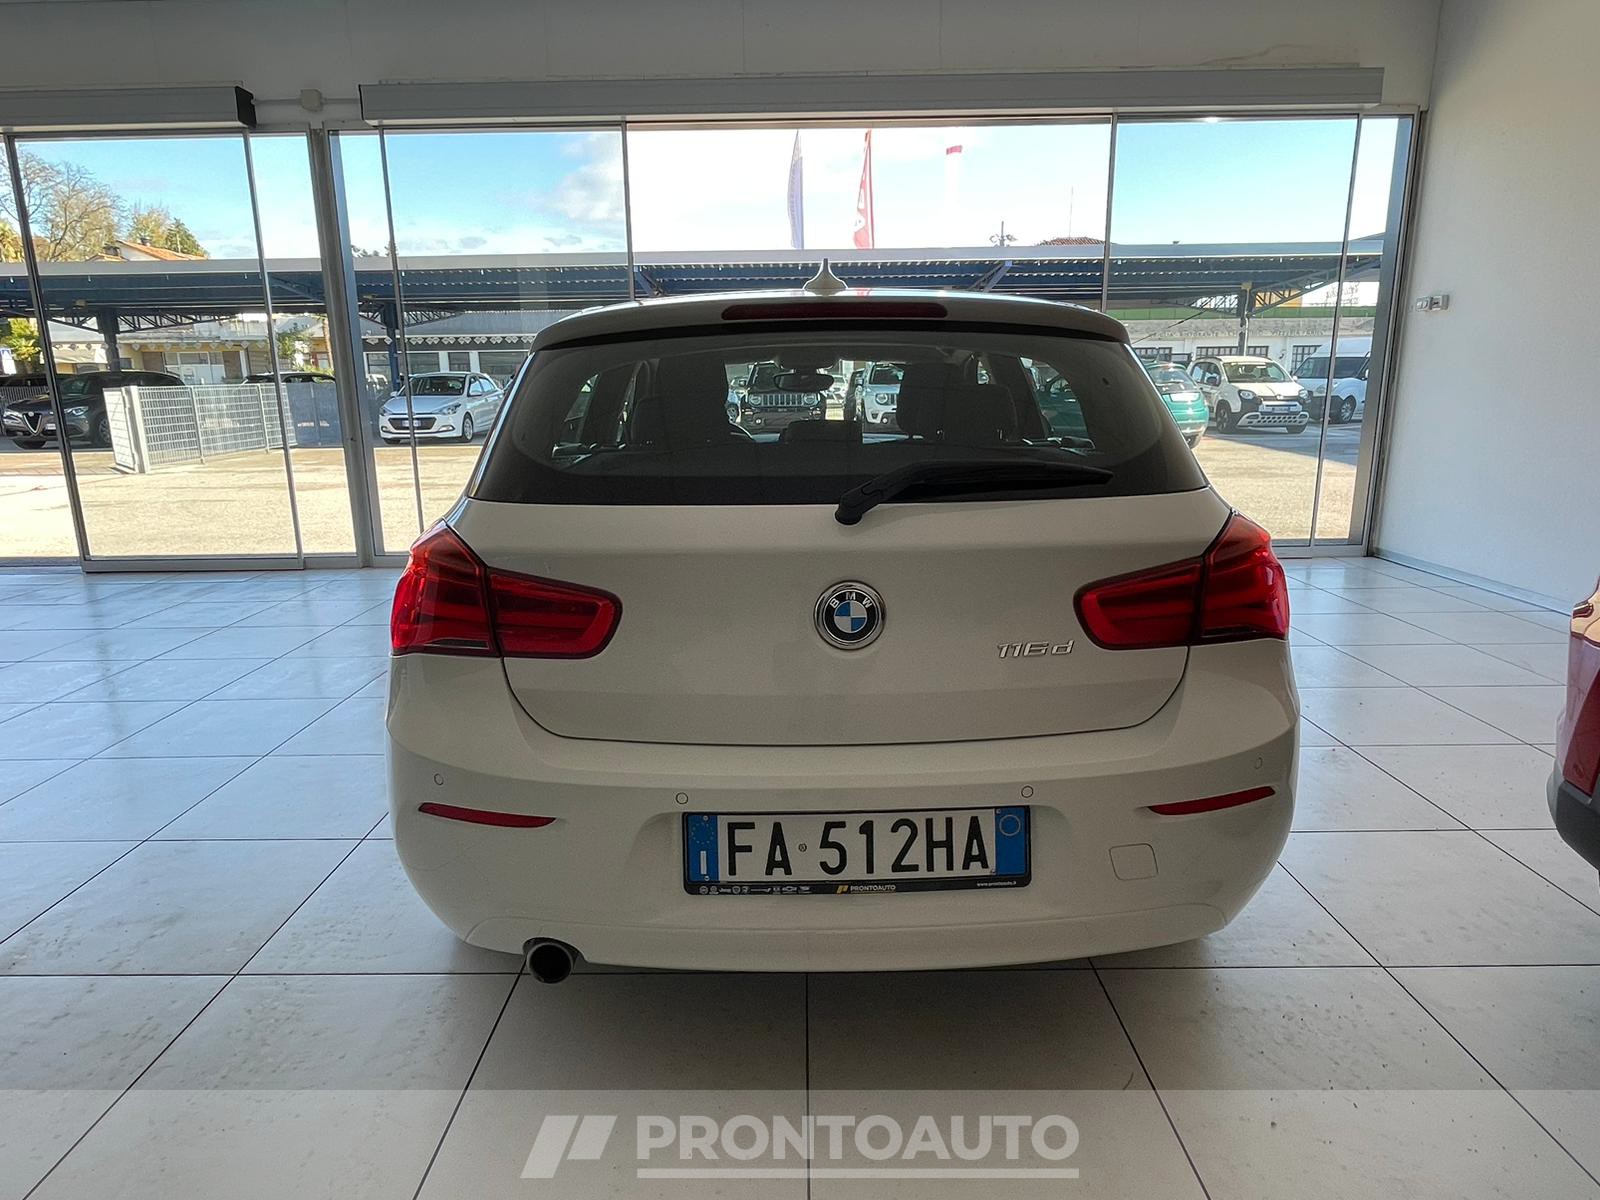 PRONTOAUTO BMW Serie 1